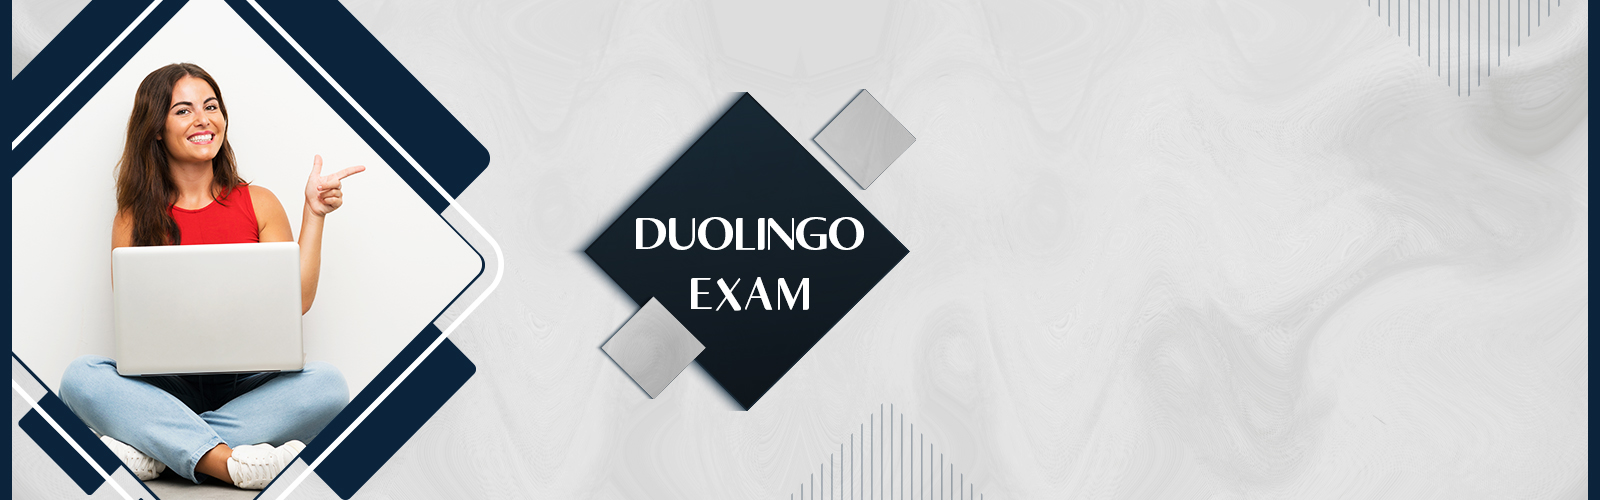 Duolingo Exam